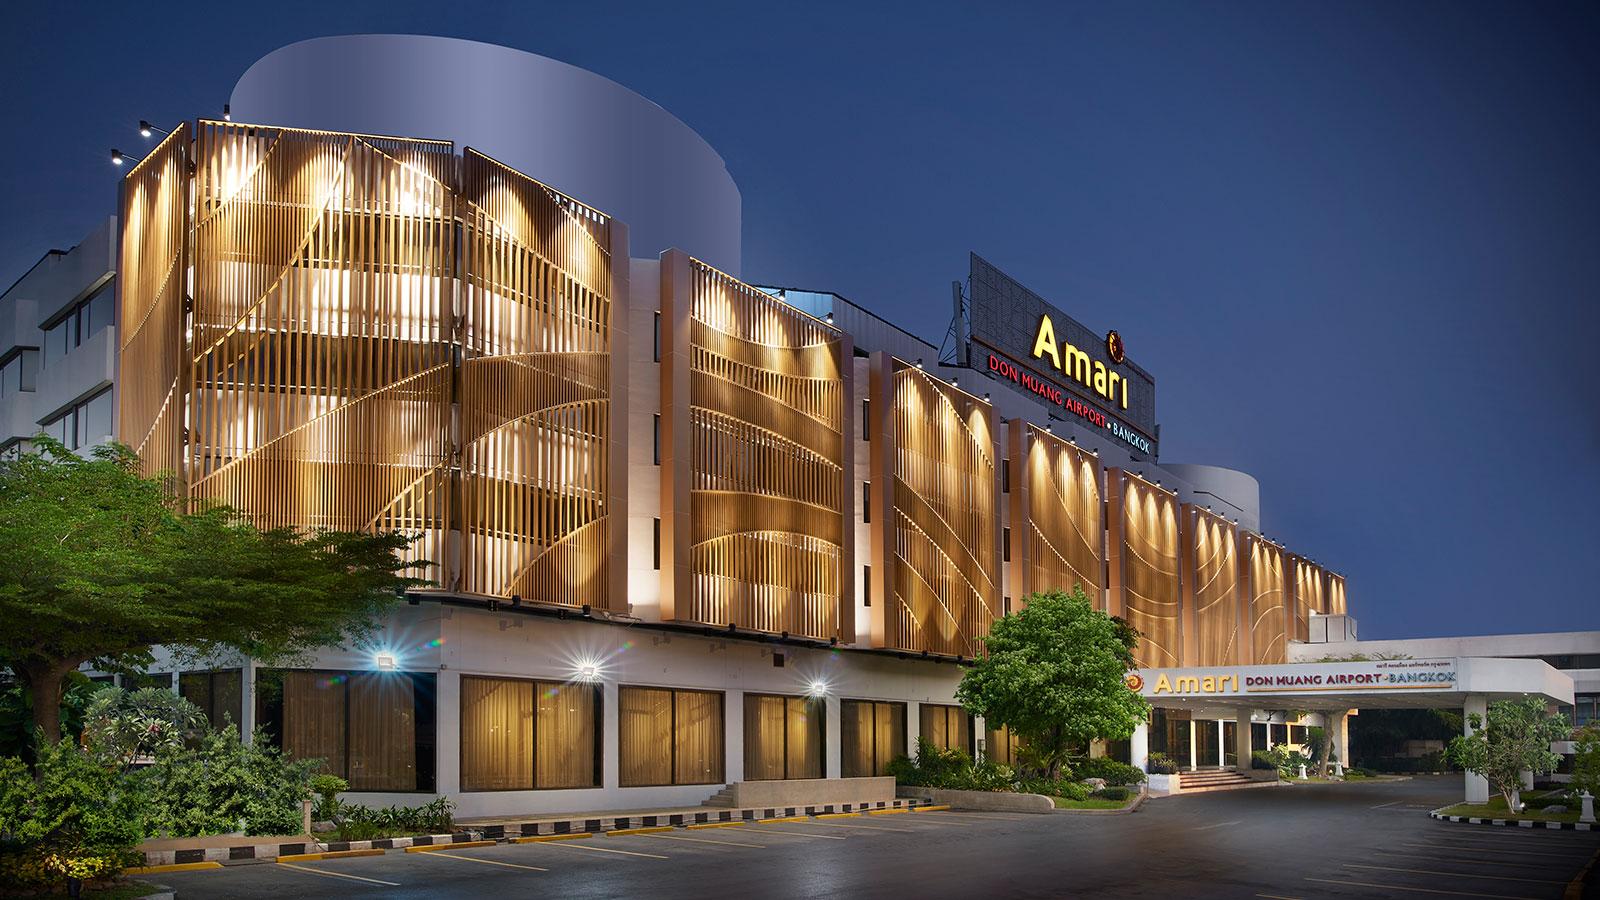 Amari Hotel ngay gần sân bay Don Muang